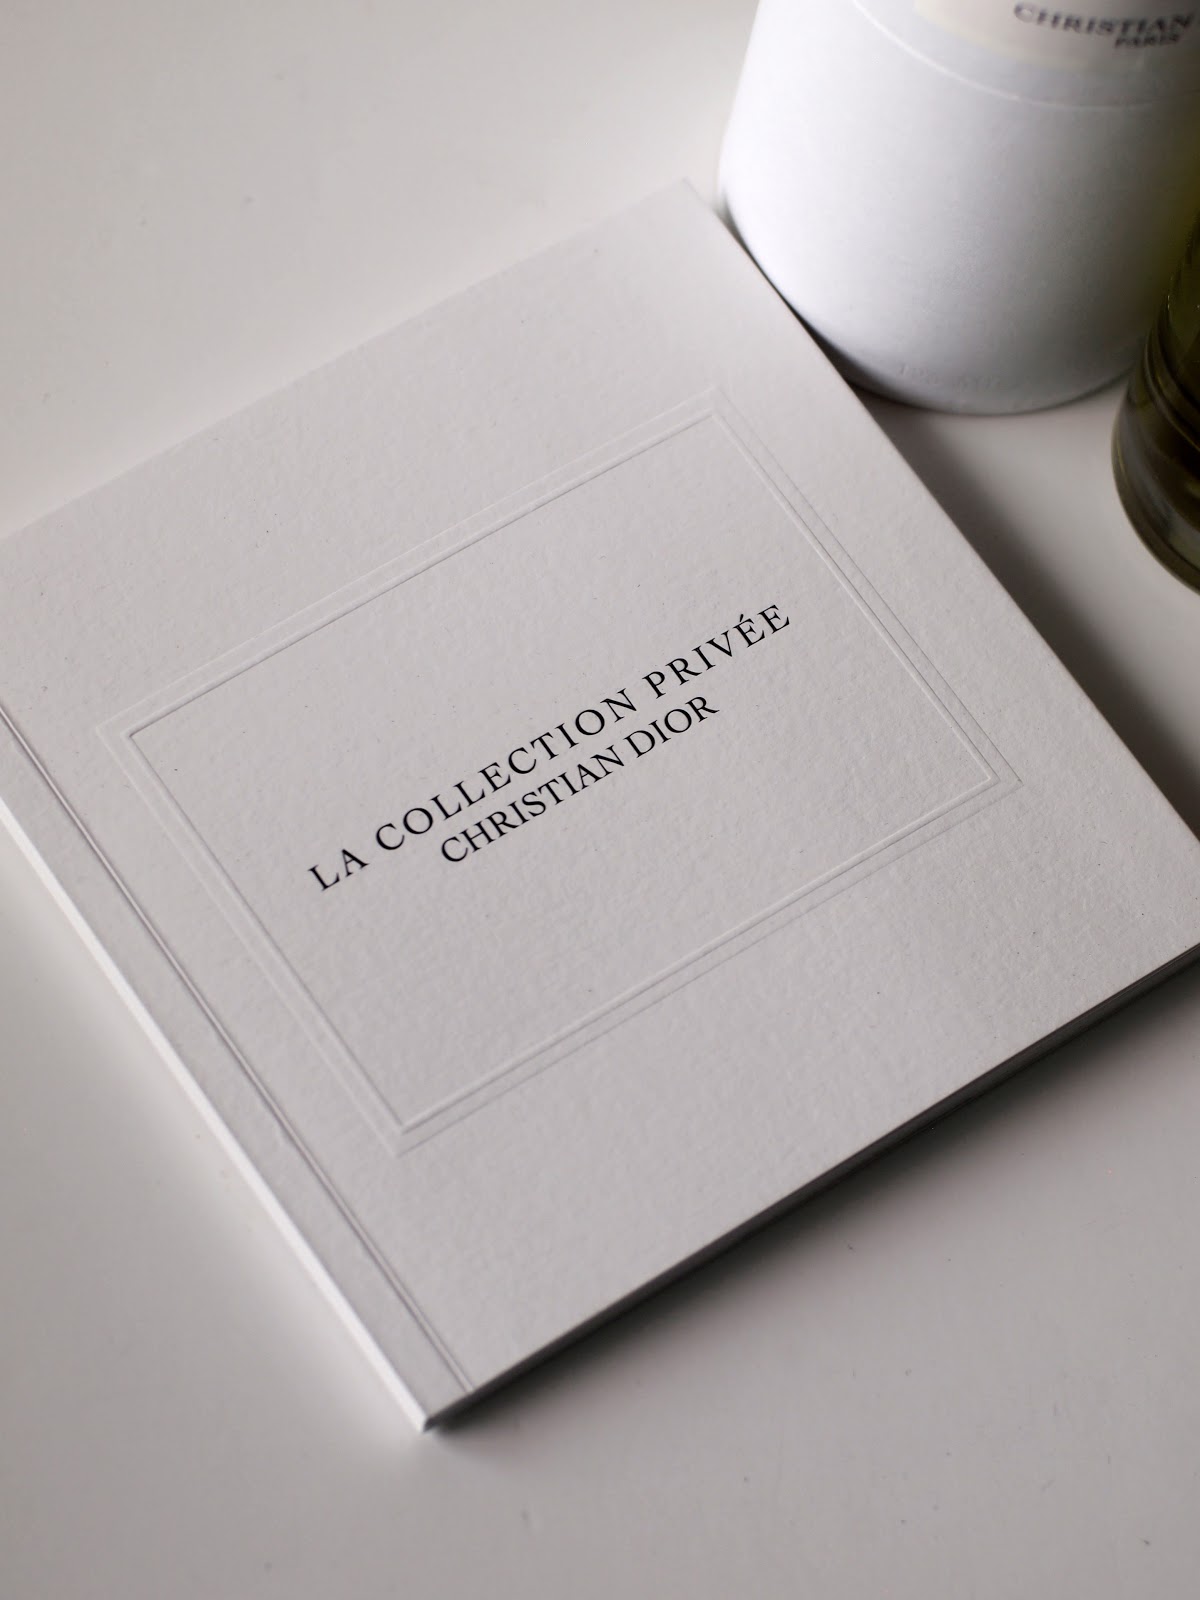 La Collection Privee Christian Dior Parfum book